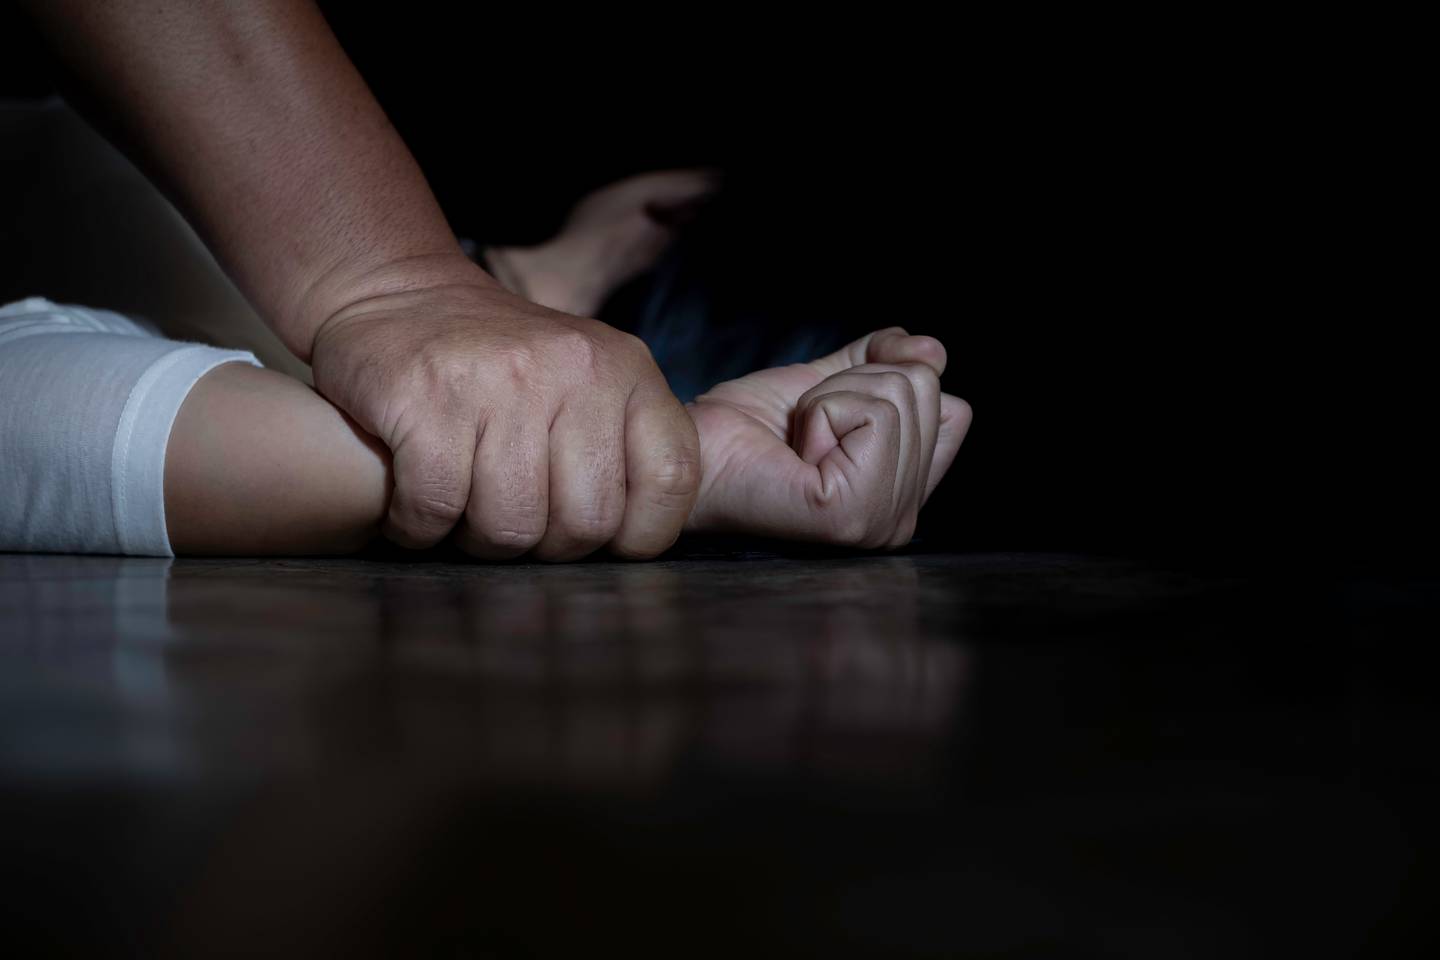 Mujer agredida. Foto Shutterstock